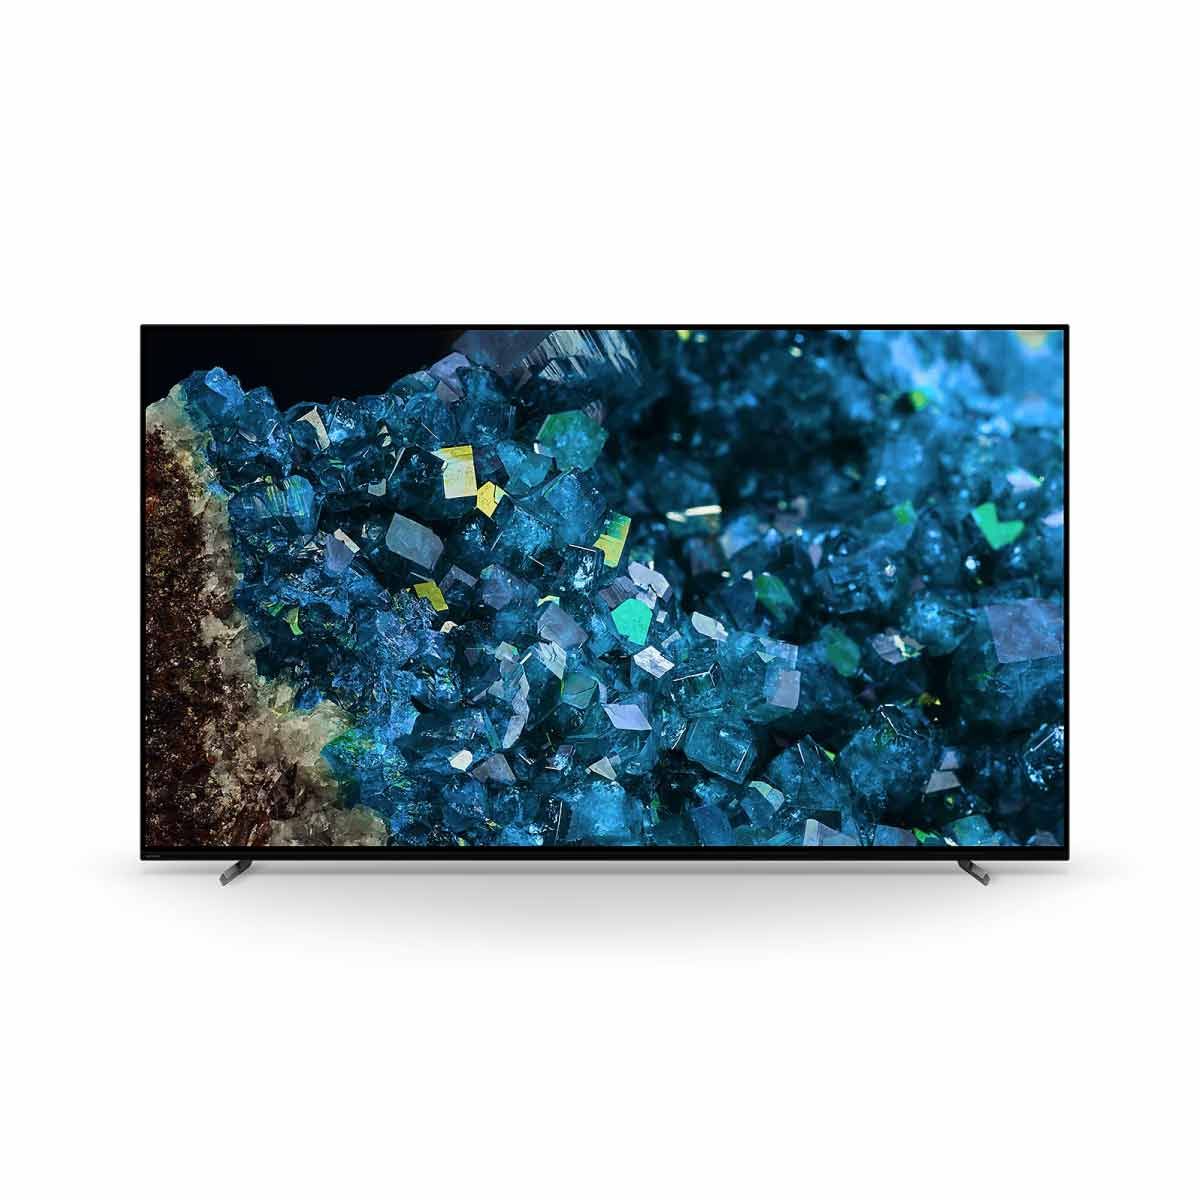 SONY Bravia XR OLED Google TV 4K รุ่น XR-65A80L Google TV 65 นิ้ว 4K Ultra HD 120 Hz A80L Series ปี2023